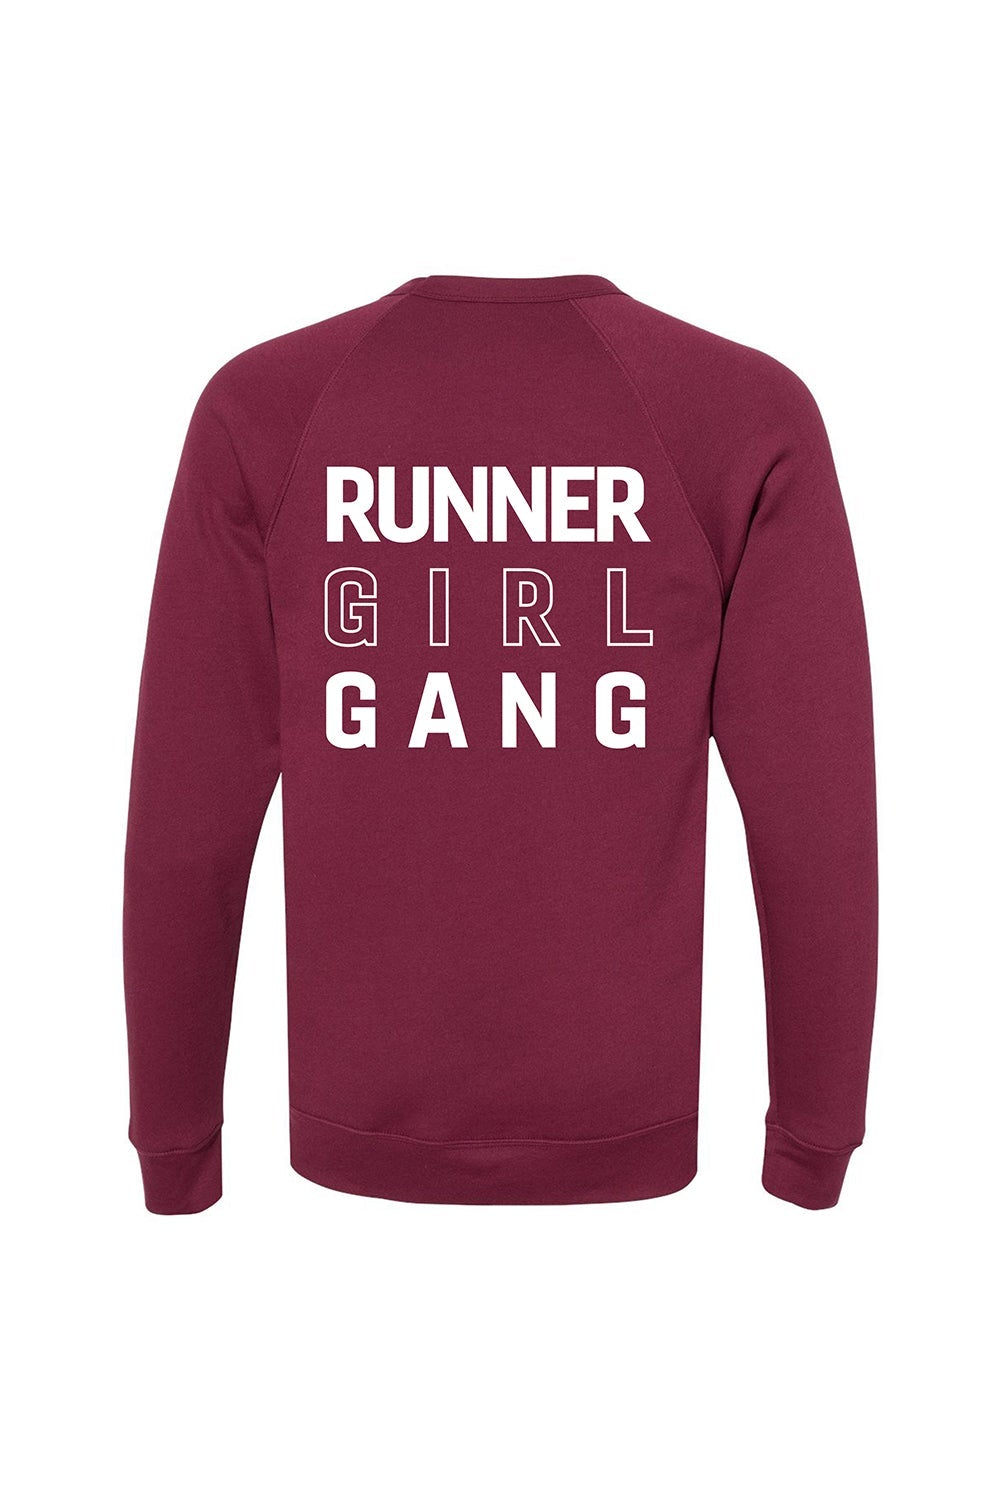 Sarah Marie Design Studio Sweatshirt XSmall / Maroon Runner Girl Gang Sweatshirt